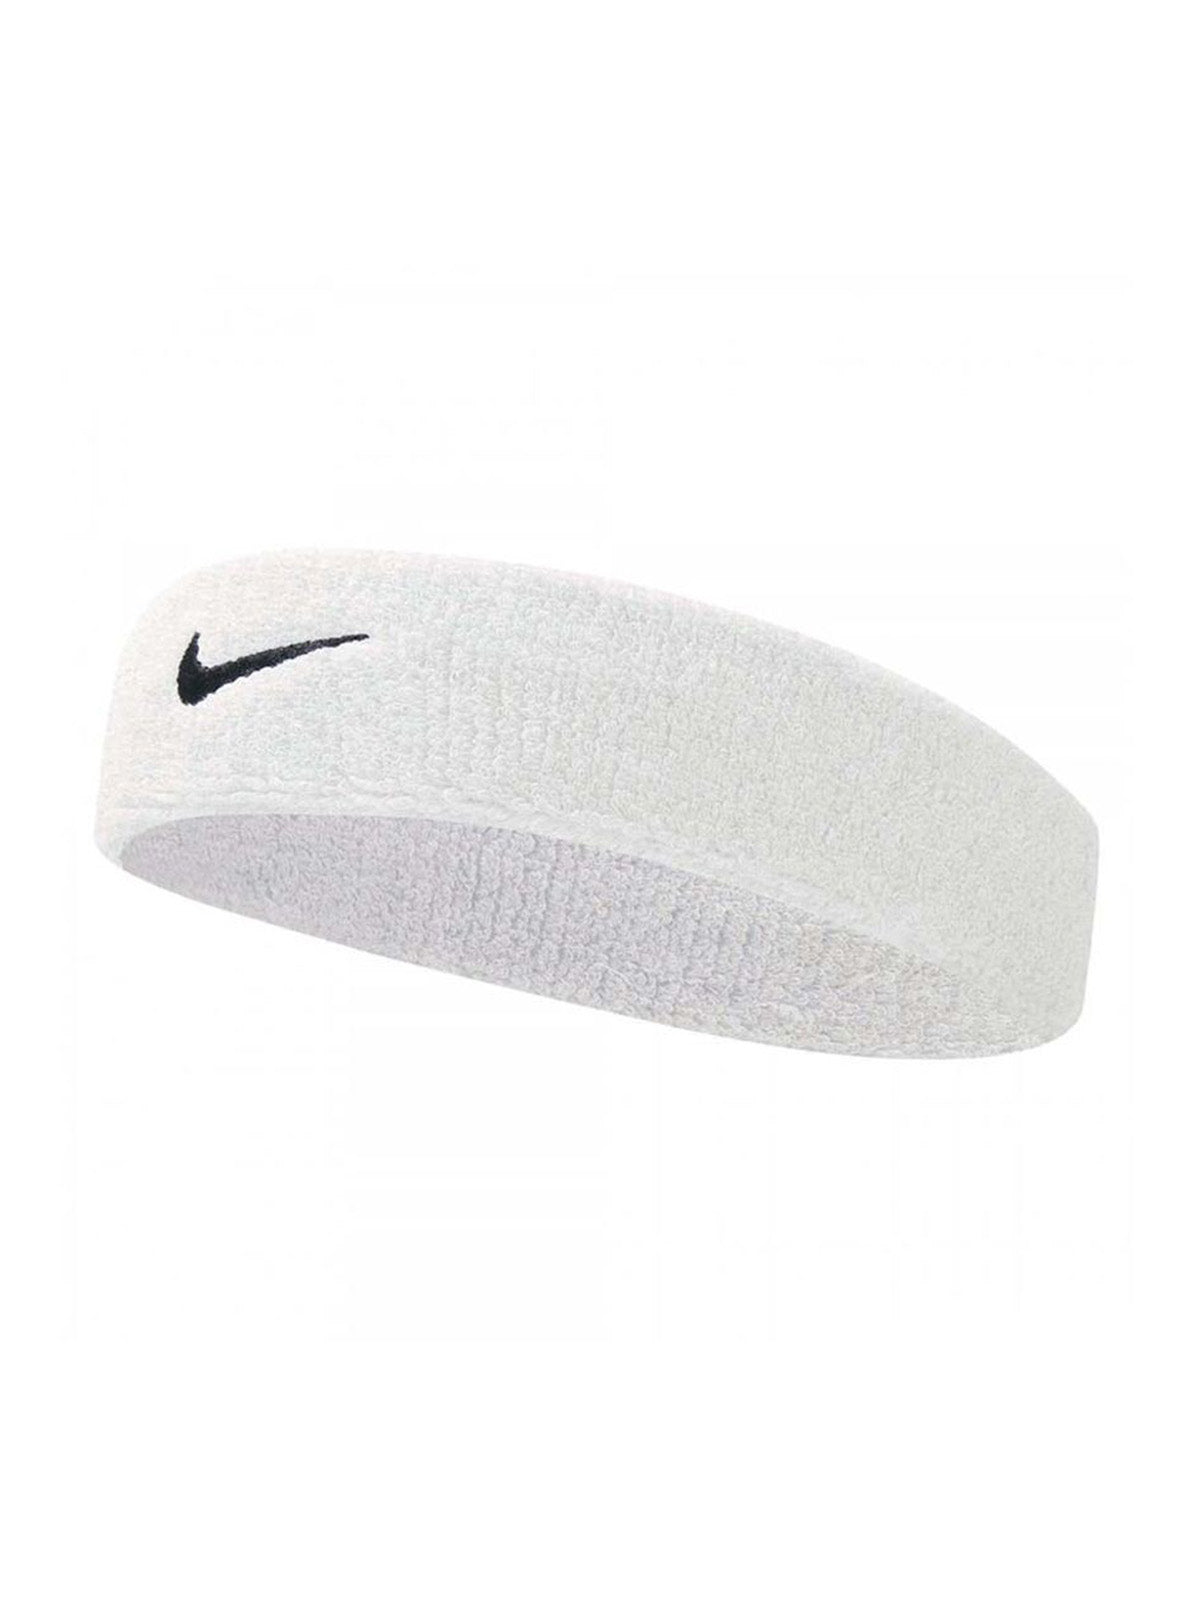 Fasce Unisex Nike - Swoosh Headband - Bianco